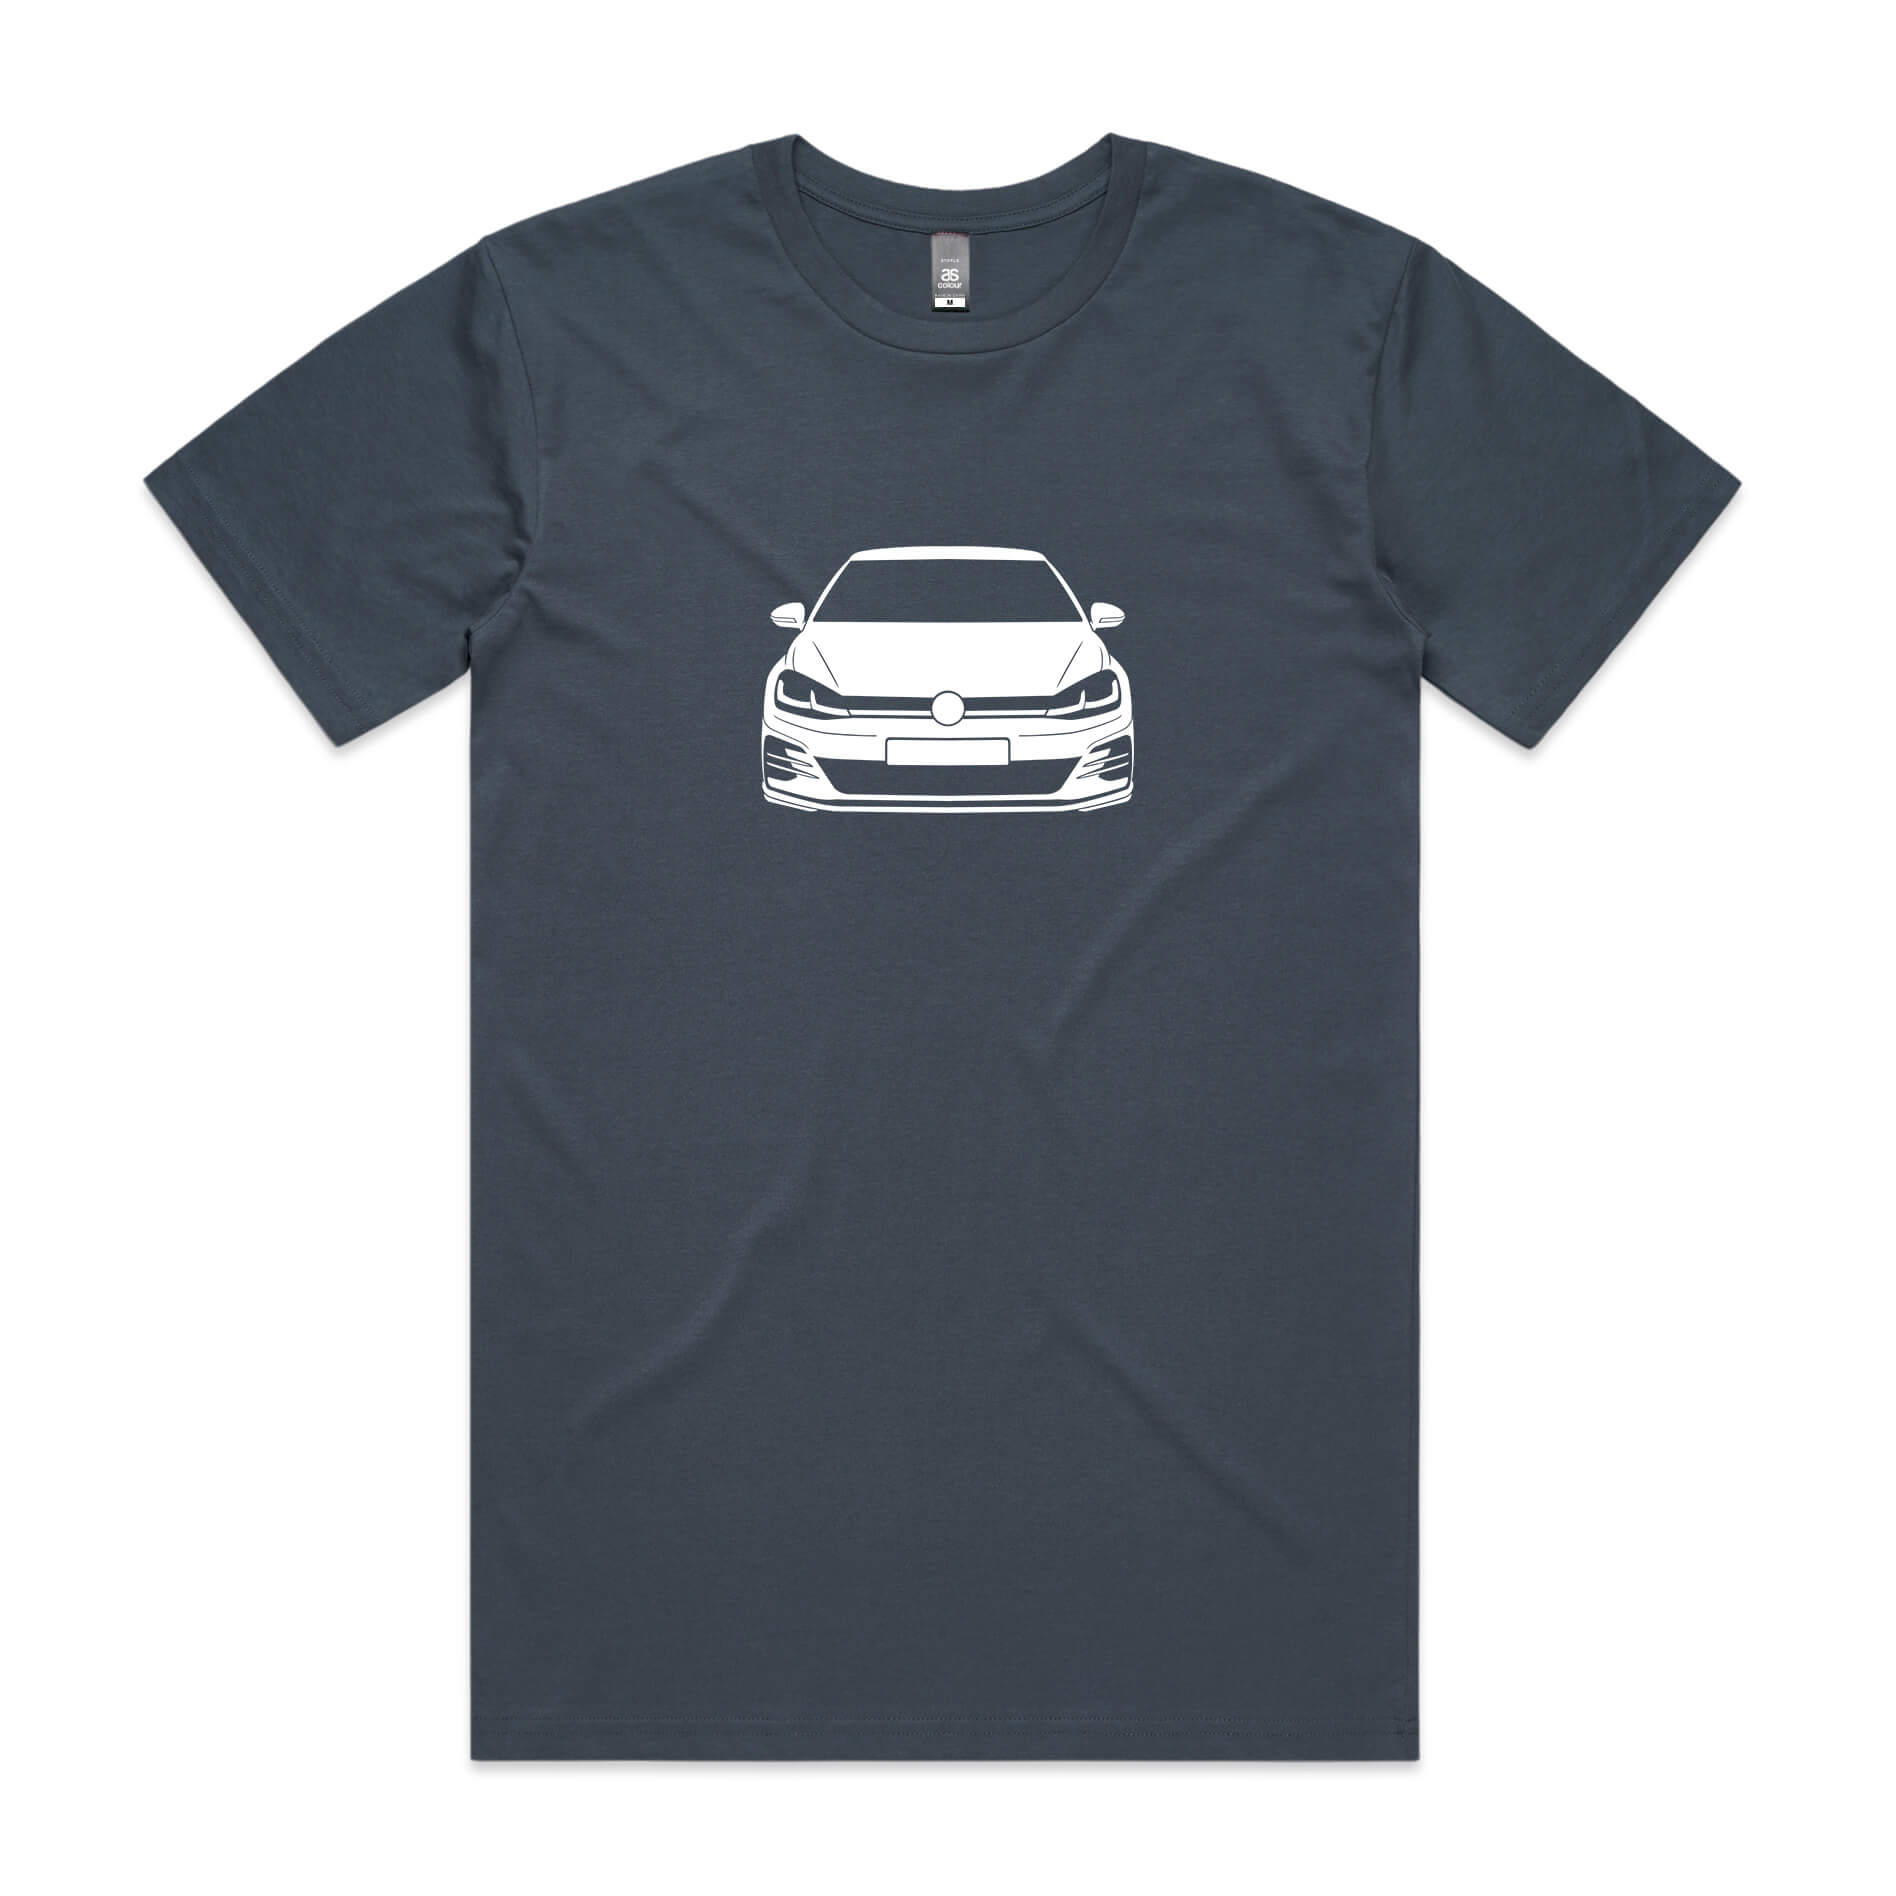 VW Golf GTi t-shirt in petrol blue